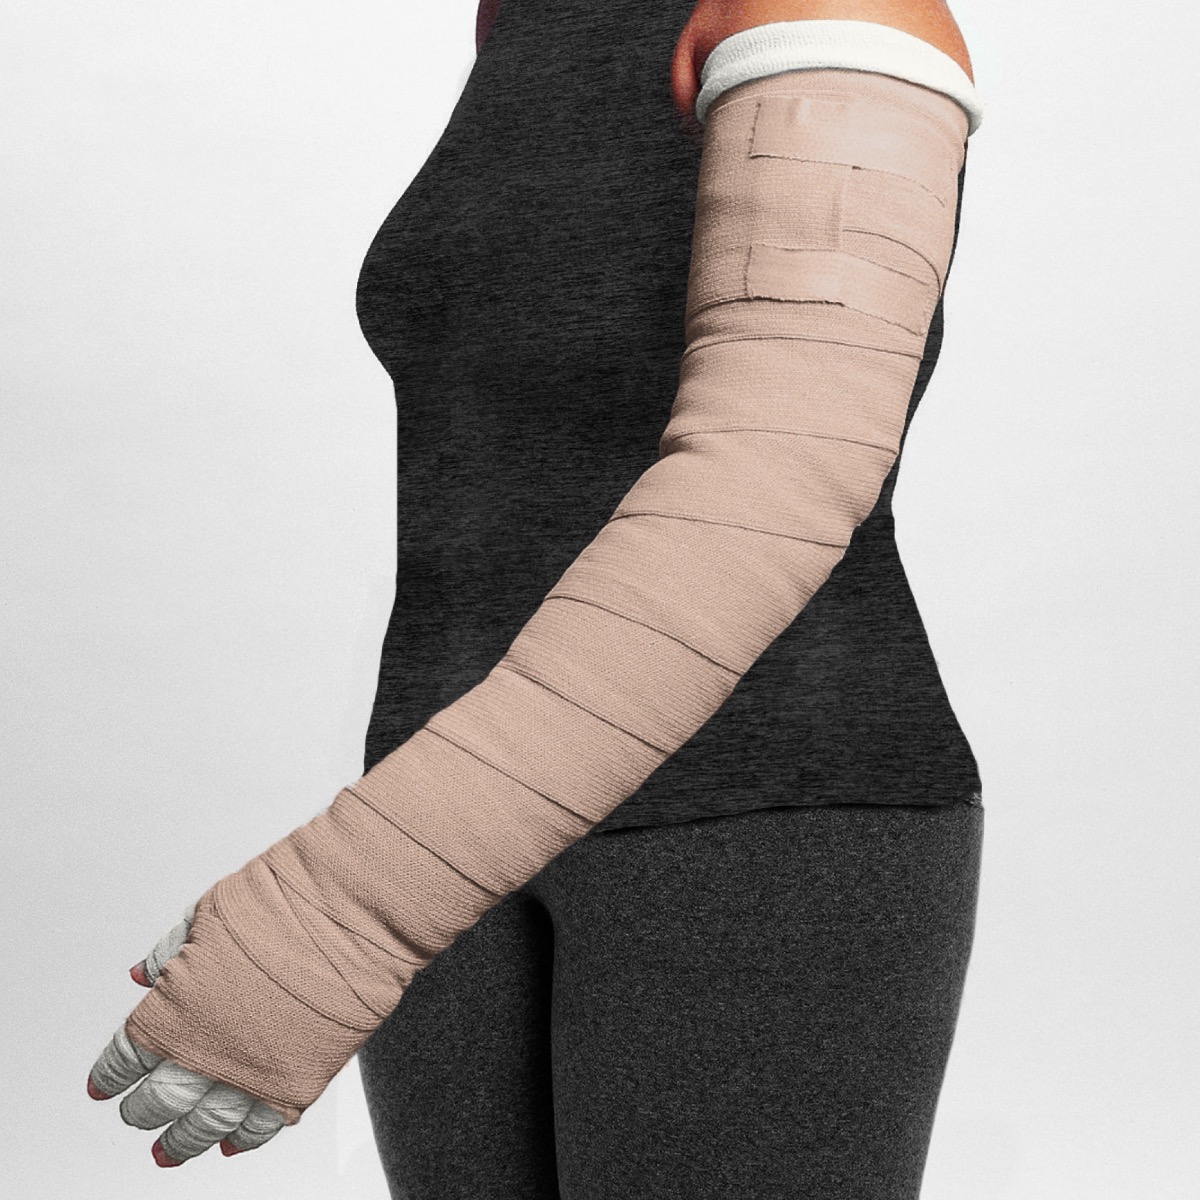 Rosidal Lymphset Multi-Layer Bandaging Kit